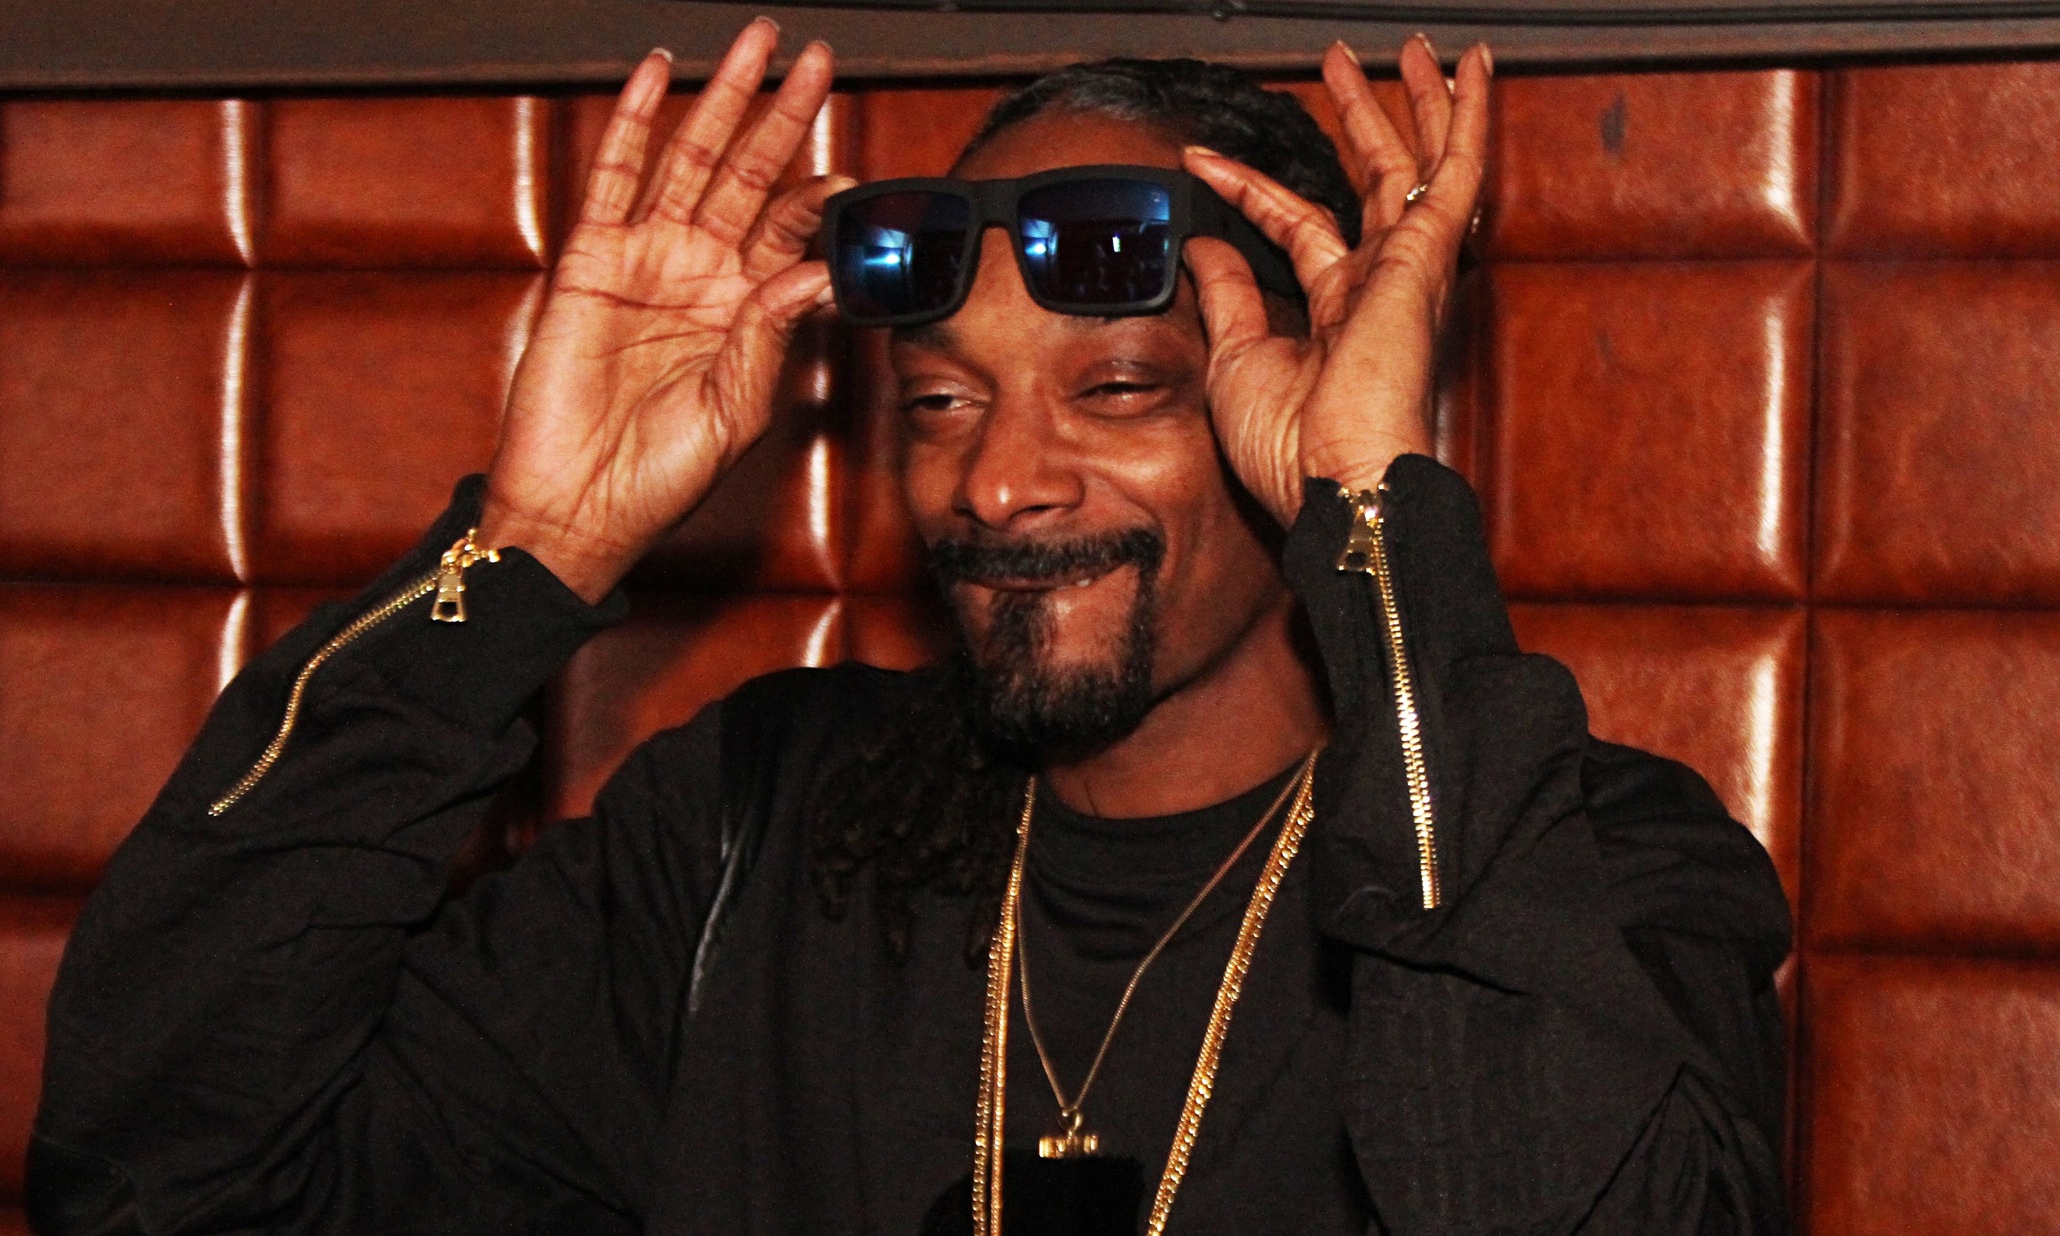 Snoop Dogg Wallpaper Pc ~ Snoop Dogg Iphone Wallpapers | Leitrisner